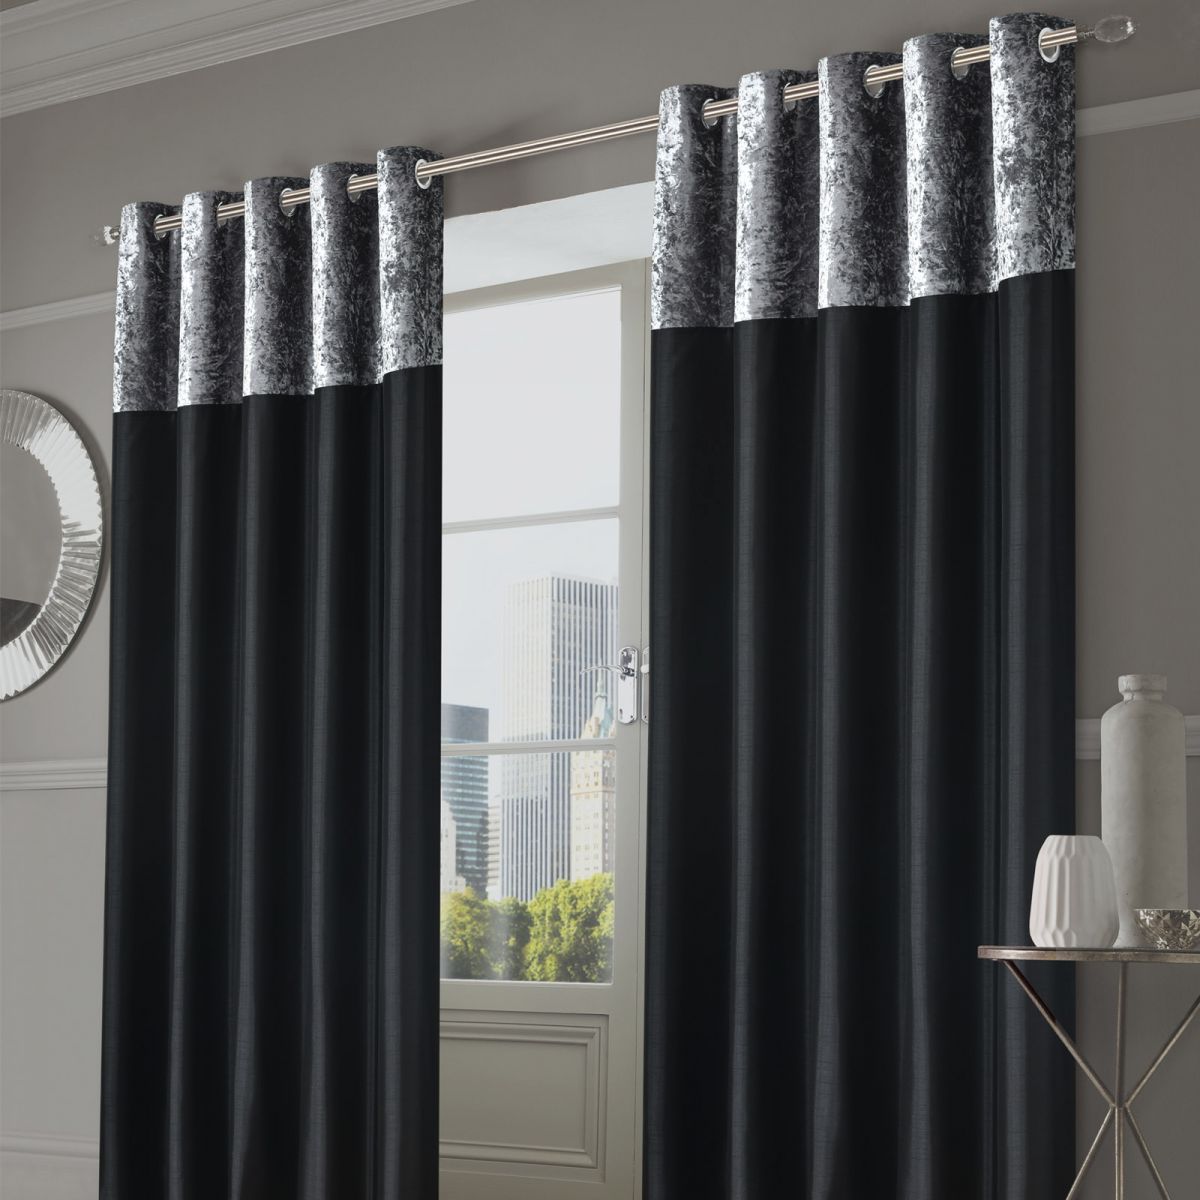 Sienna Home Manhattan Crushed Velvet Band Eyelet Curtains - Black, 66" x 72"